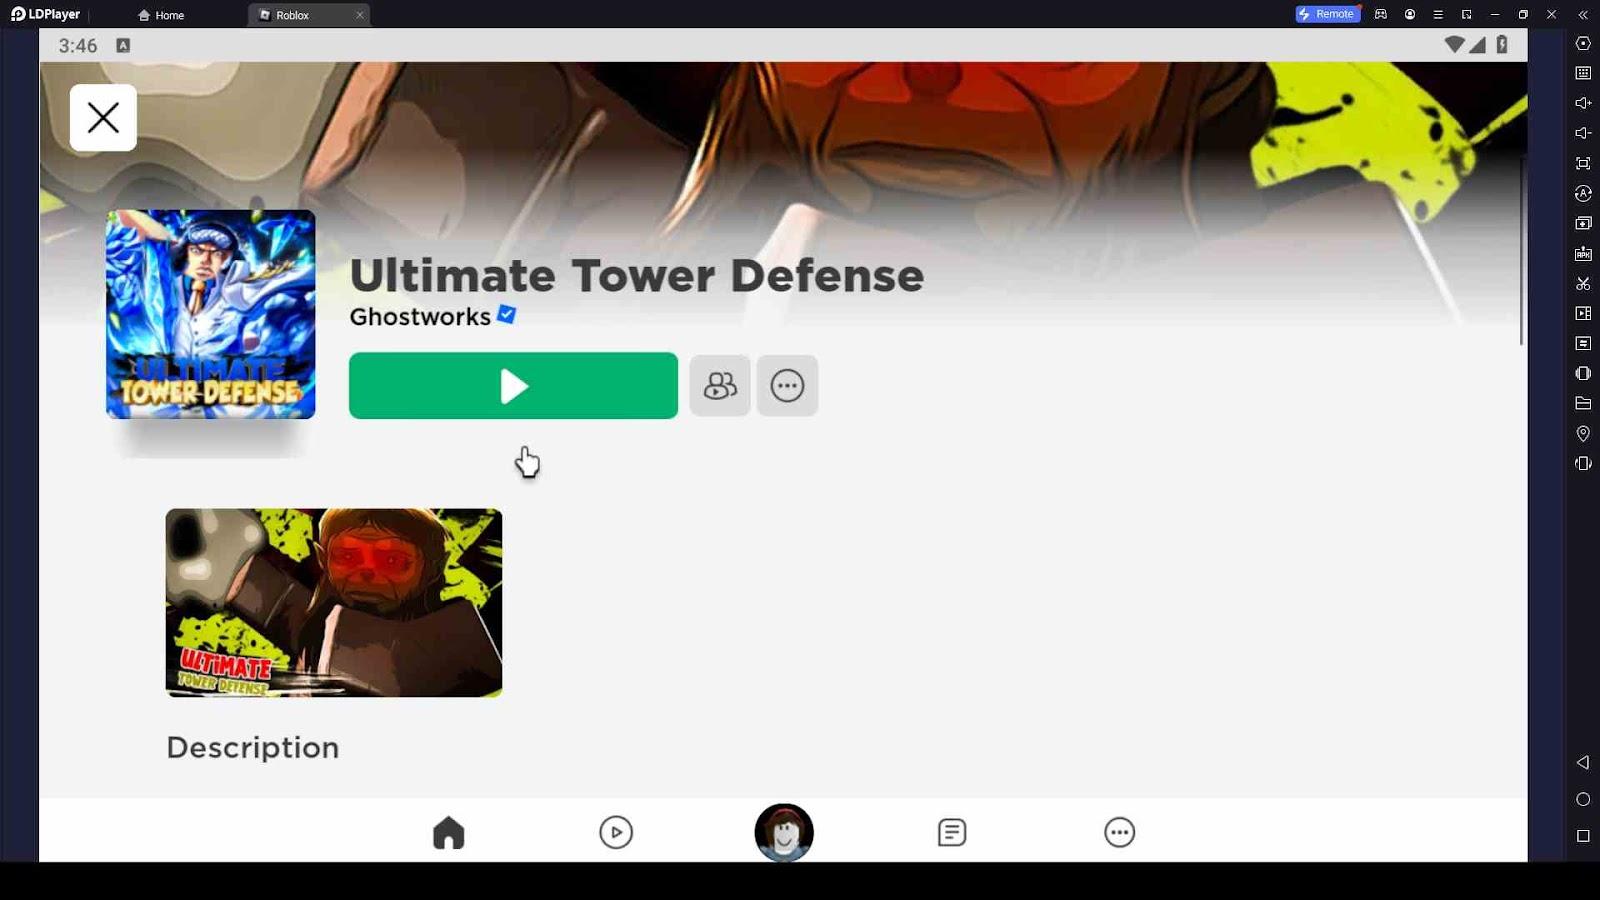 Ultimate Tower Defense Codes (December 2023): Free Gems